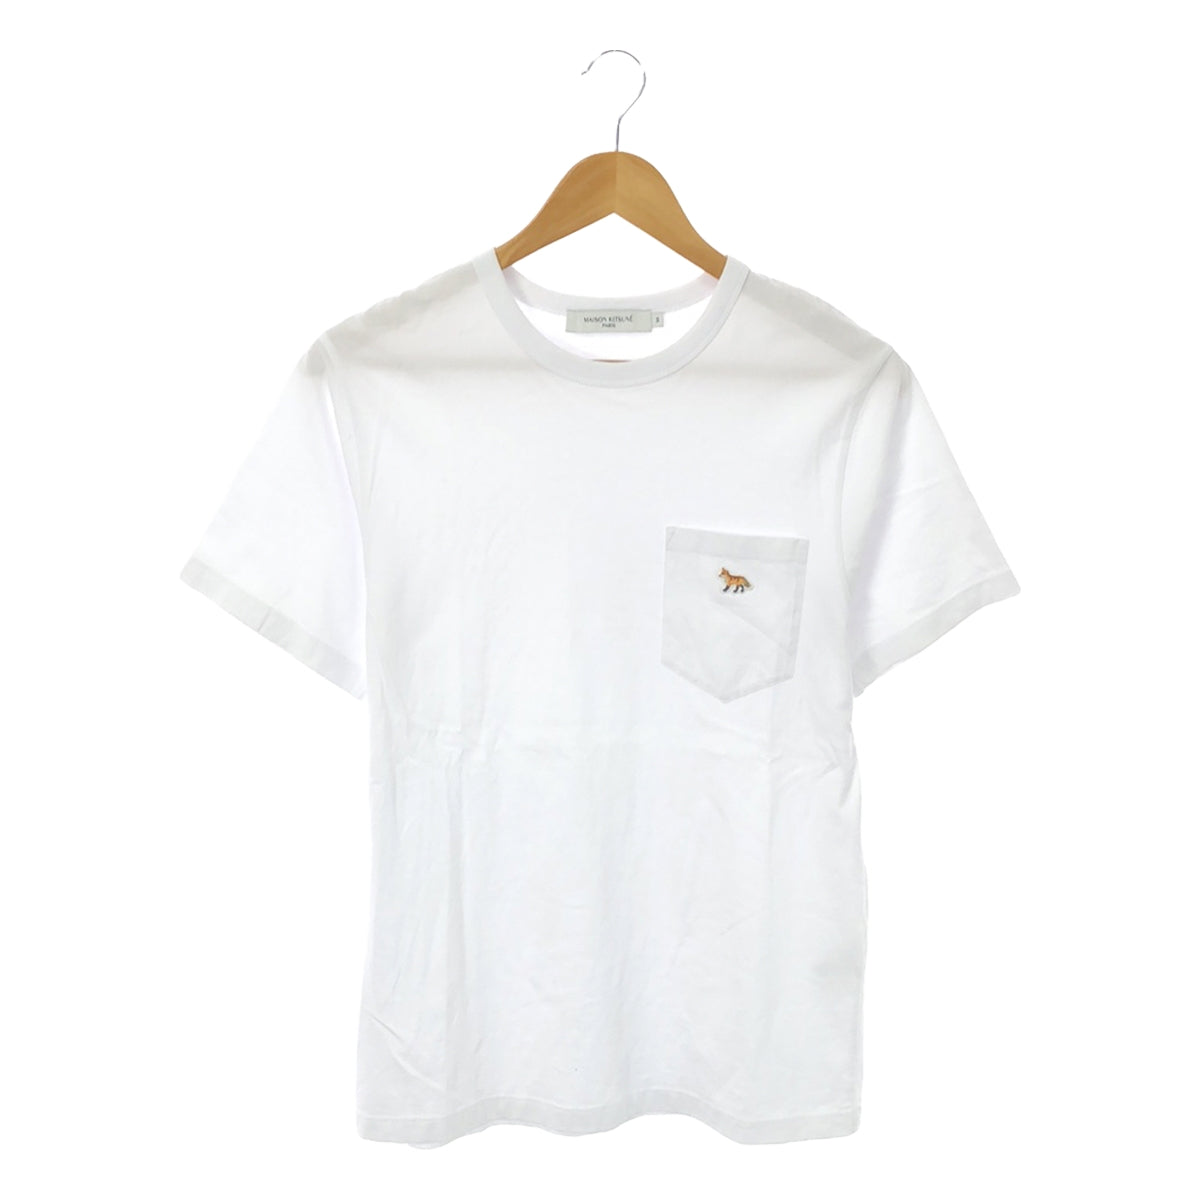 MAISON KITSUNE / メゾンキツネ | フォックスワッペン クルーネックポケットTシャツ | XS |